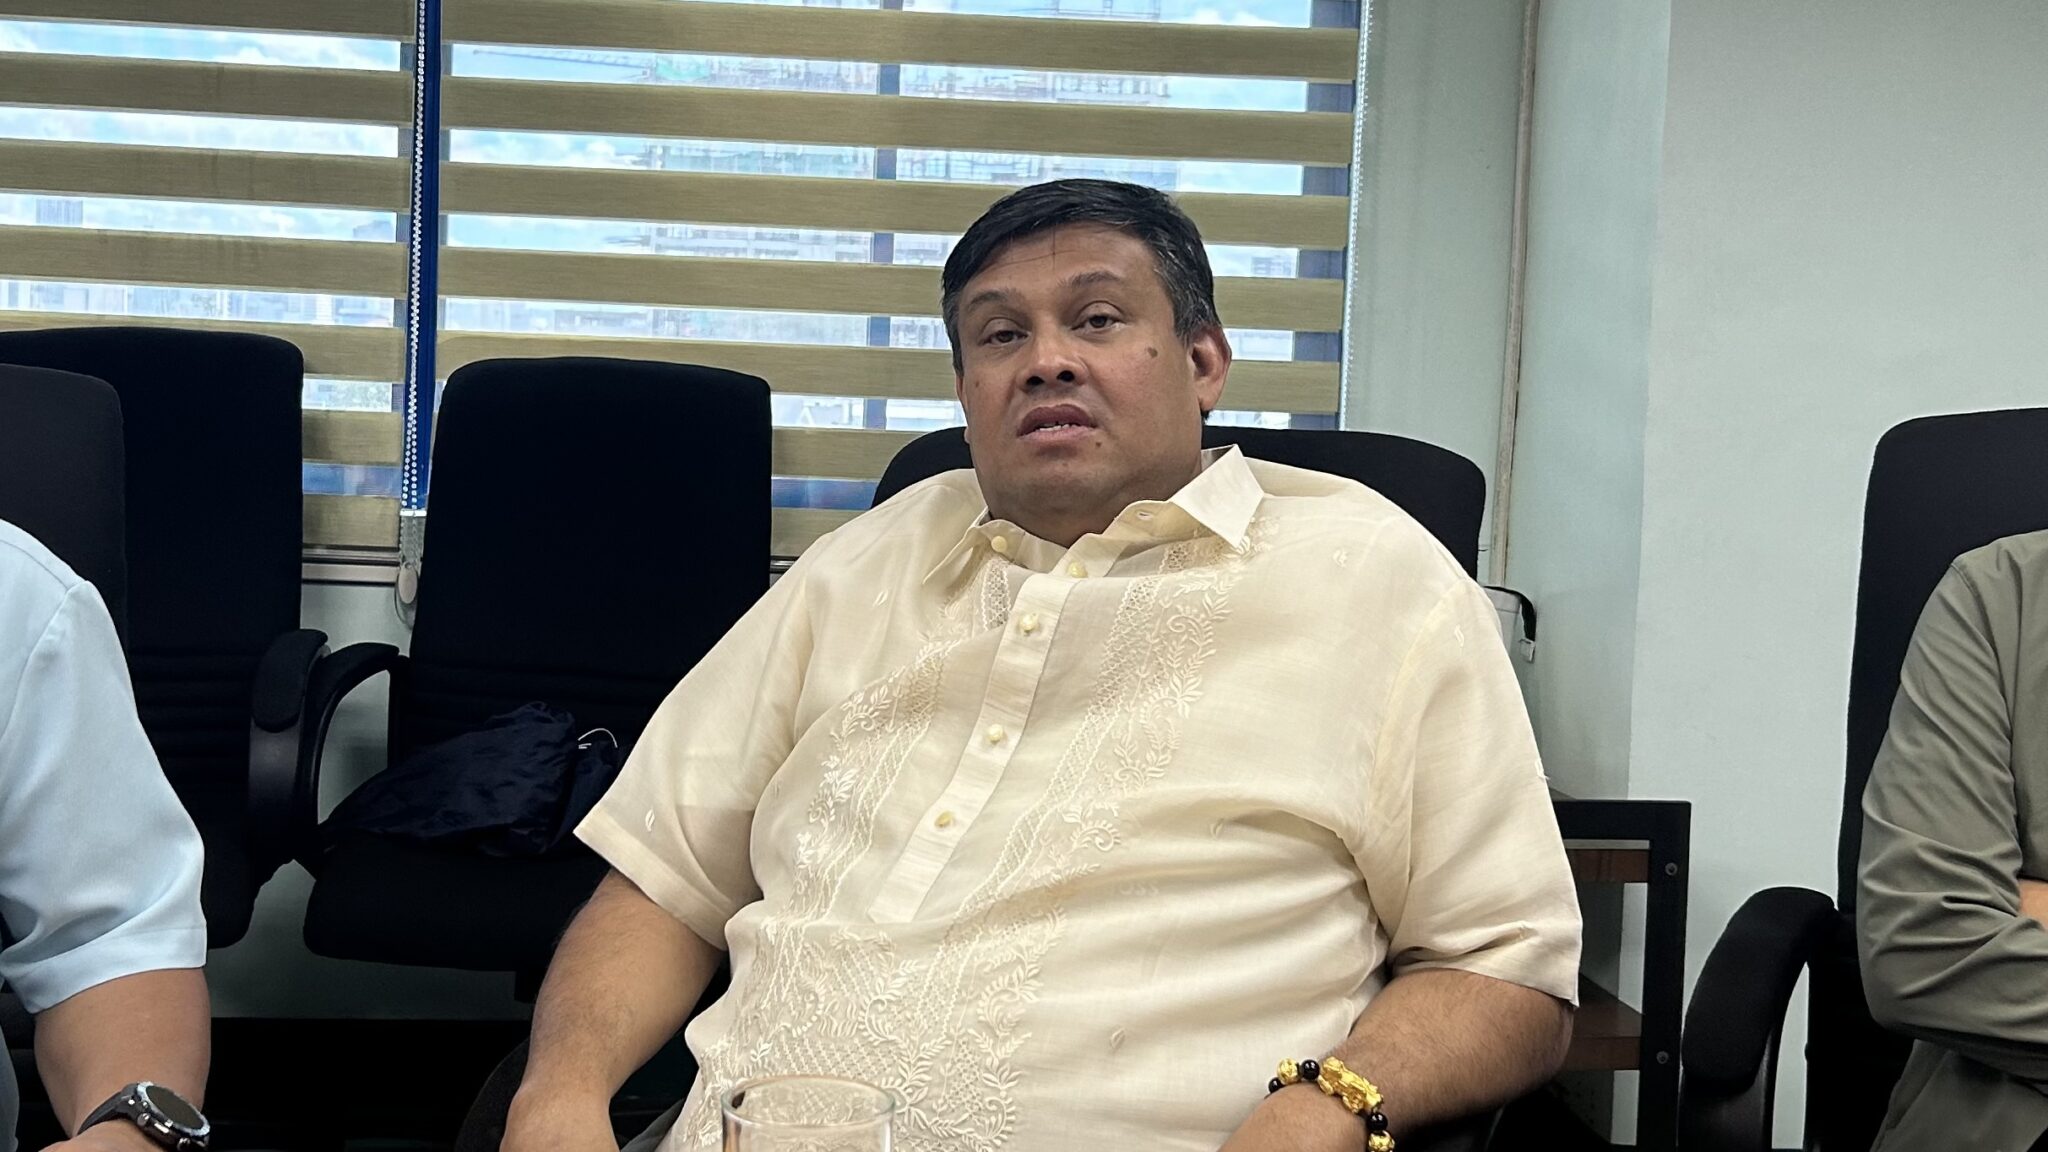 Daluz ‘confident’ with Cebu City acting mayor Garcia’s leadership